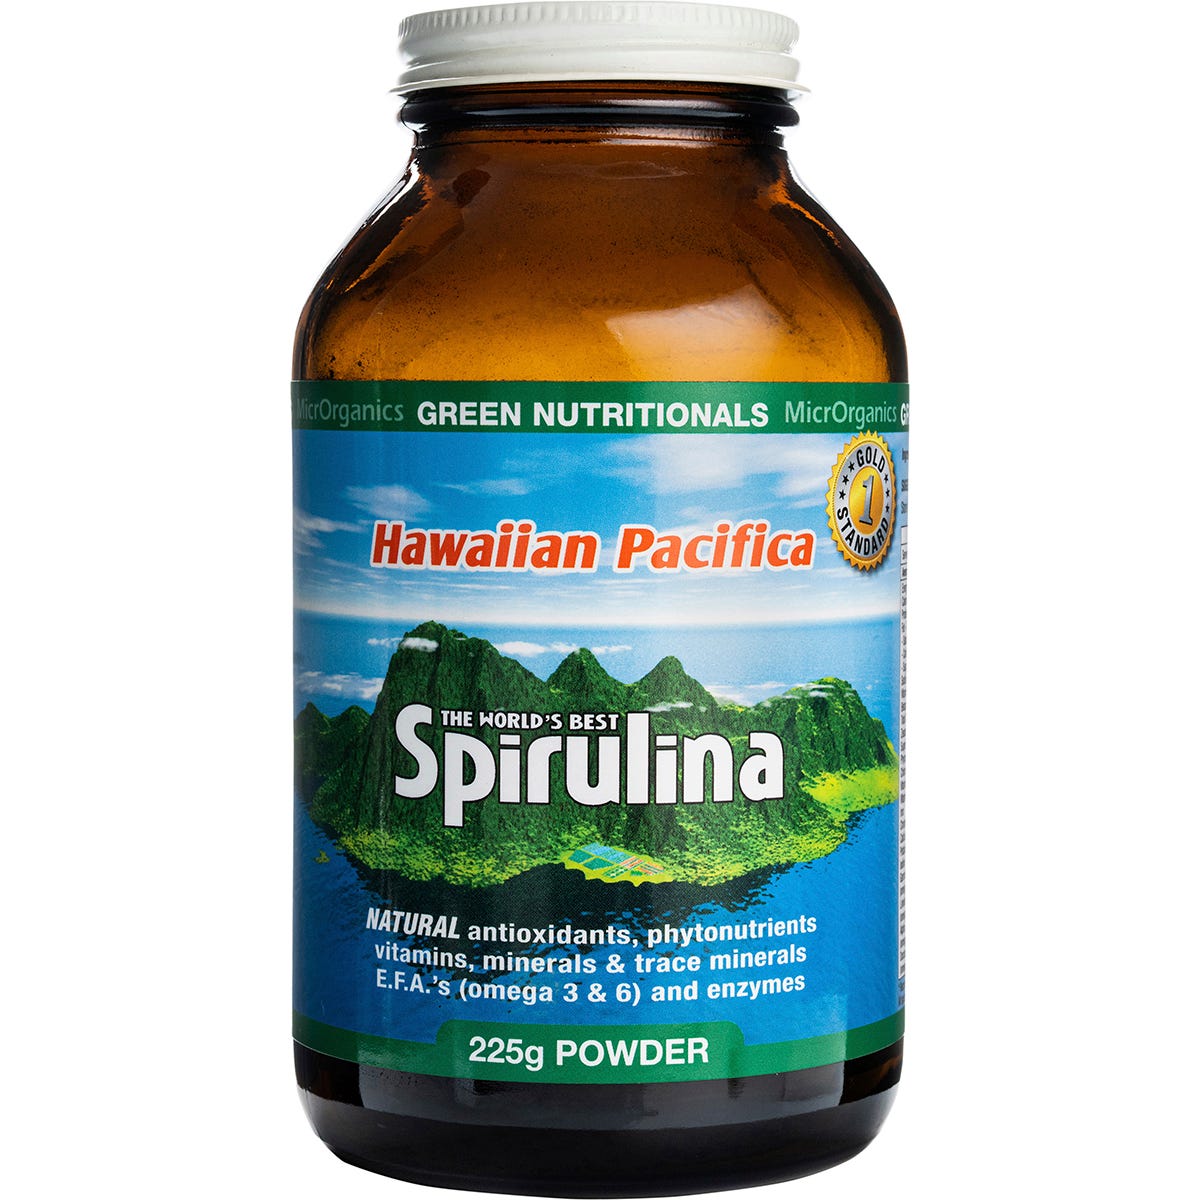 Green Nutritionals Hawaiian Pacifica Spirulina Powder 225g - Dr Earth - Greens